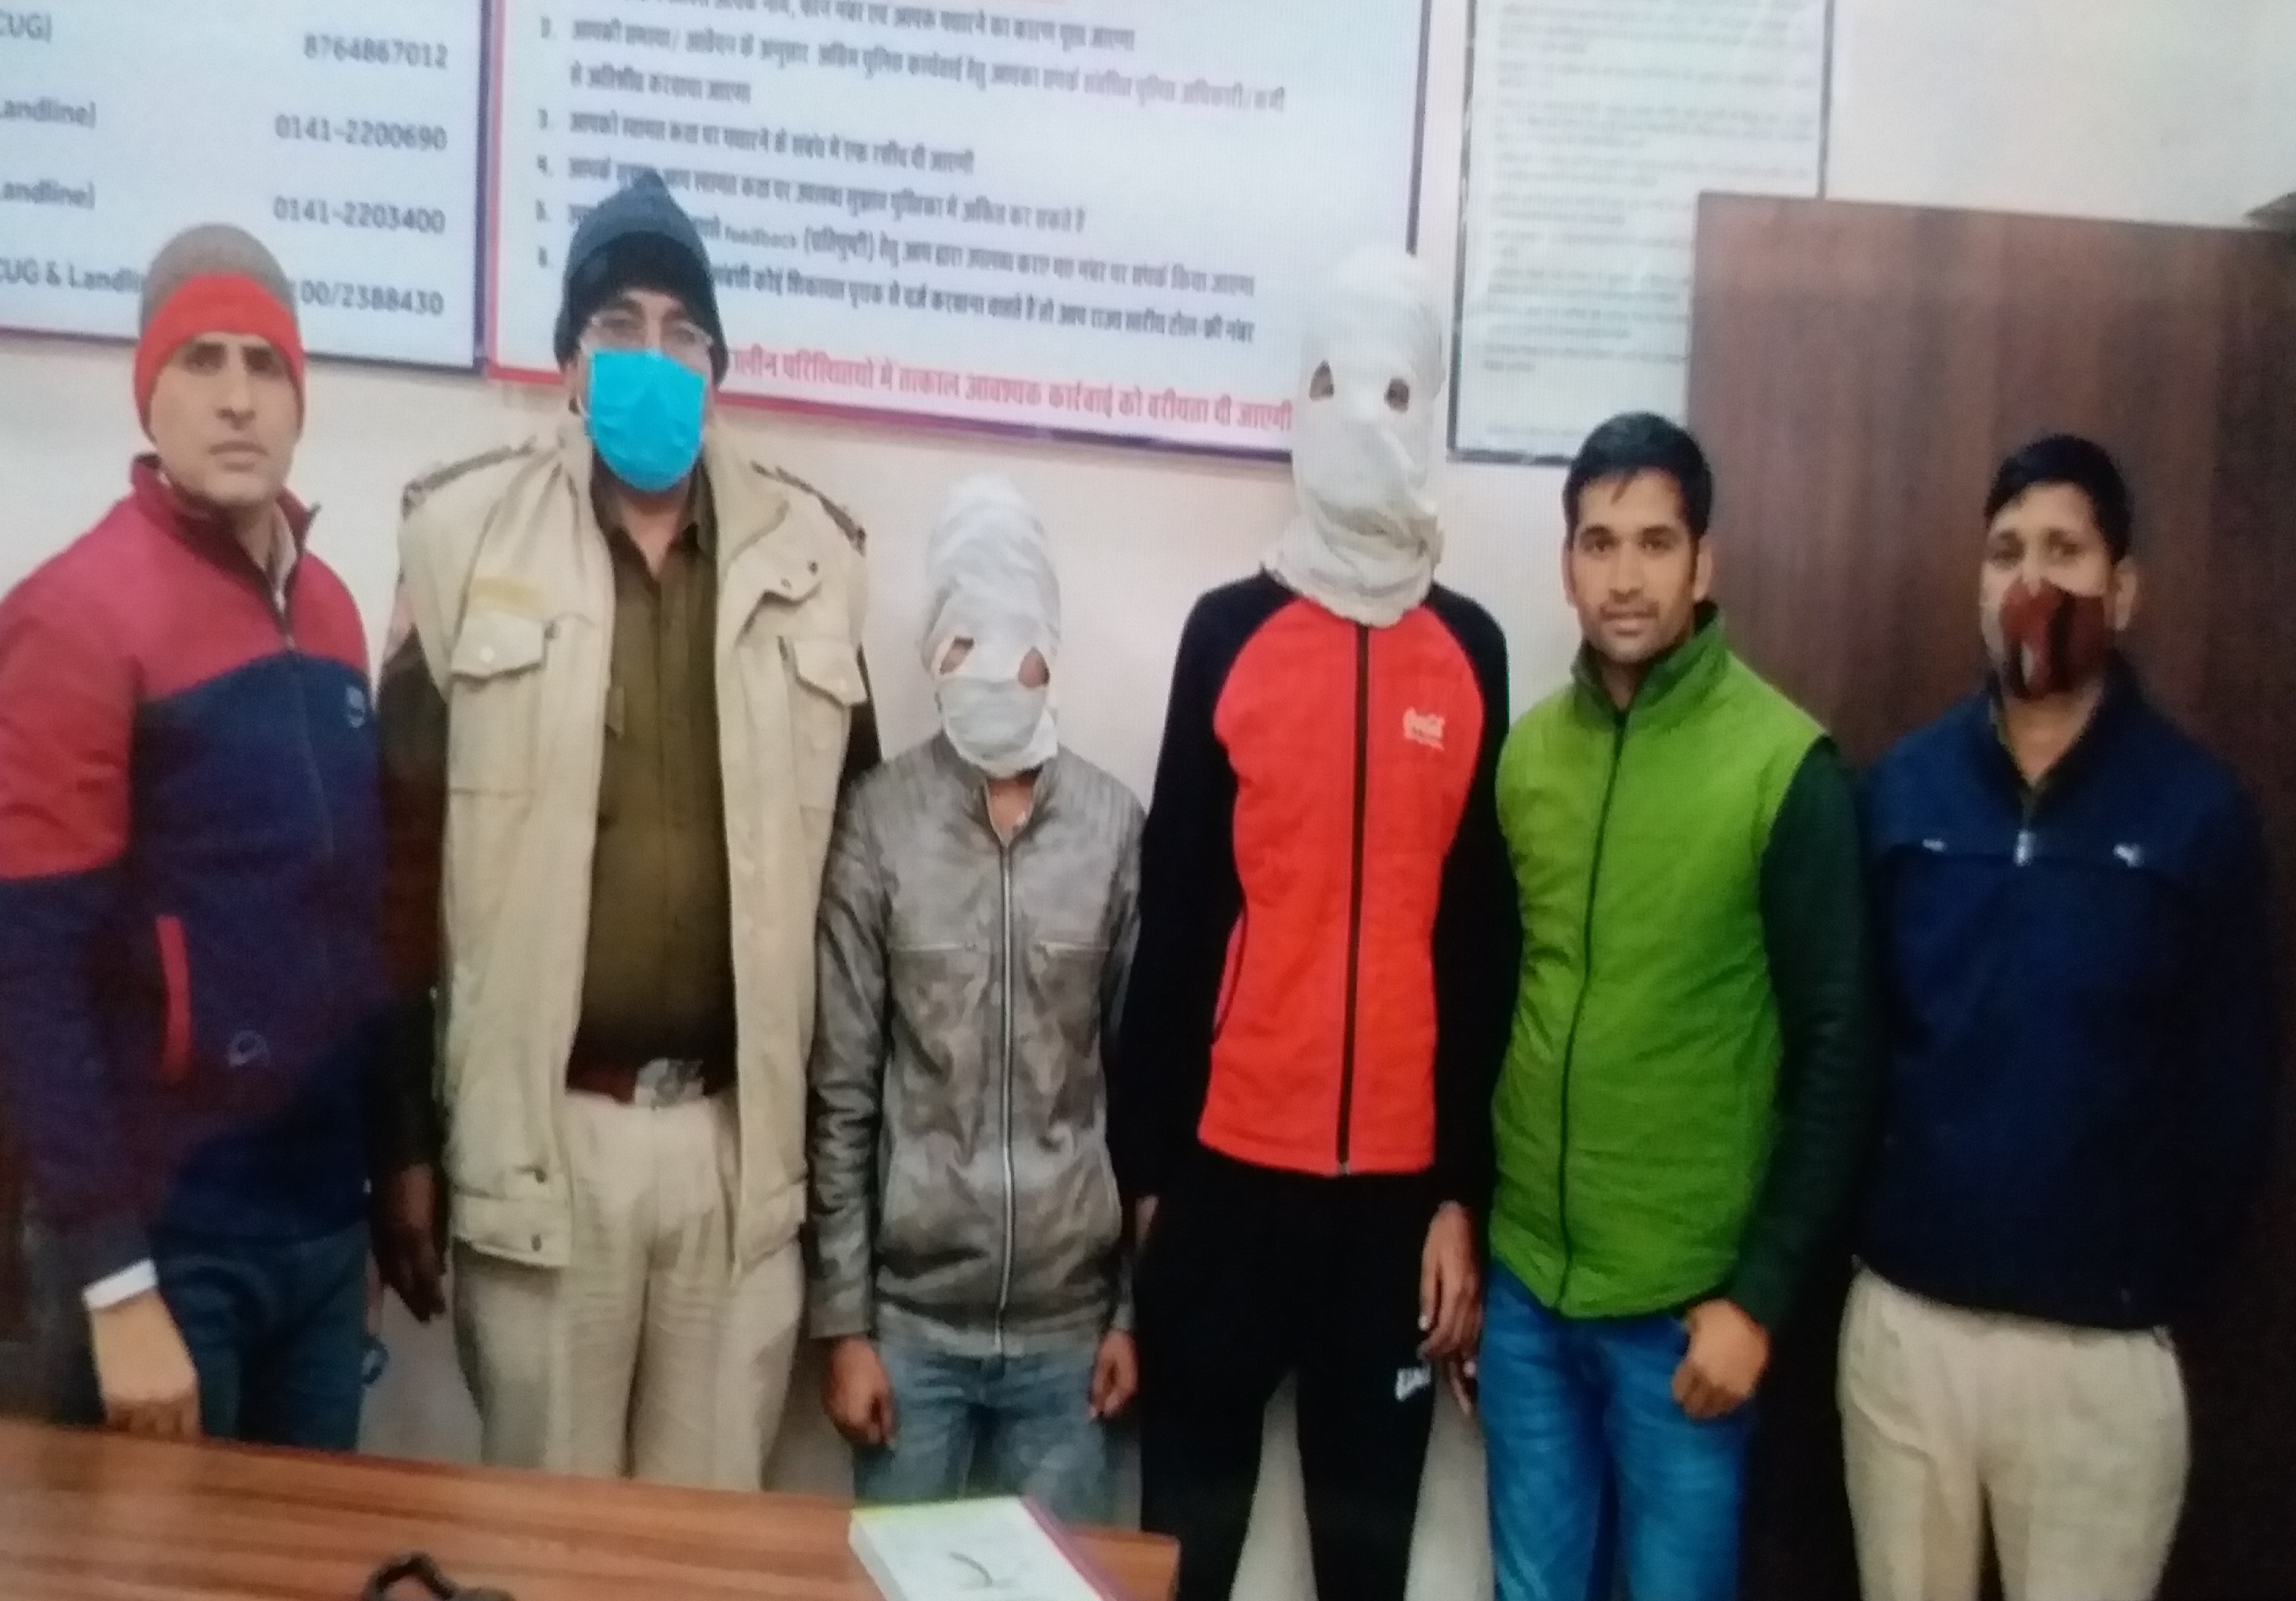 Fraud arrested in Jaipur, Jaipur latest news